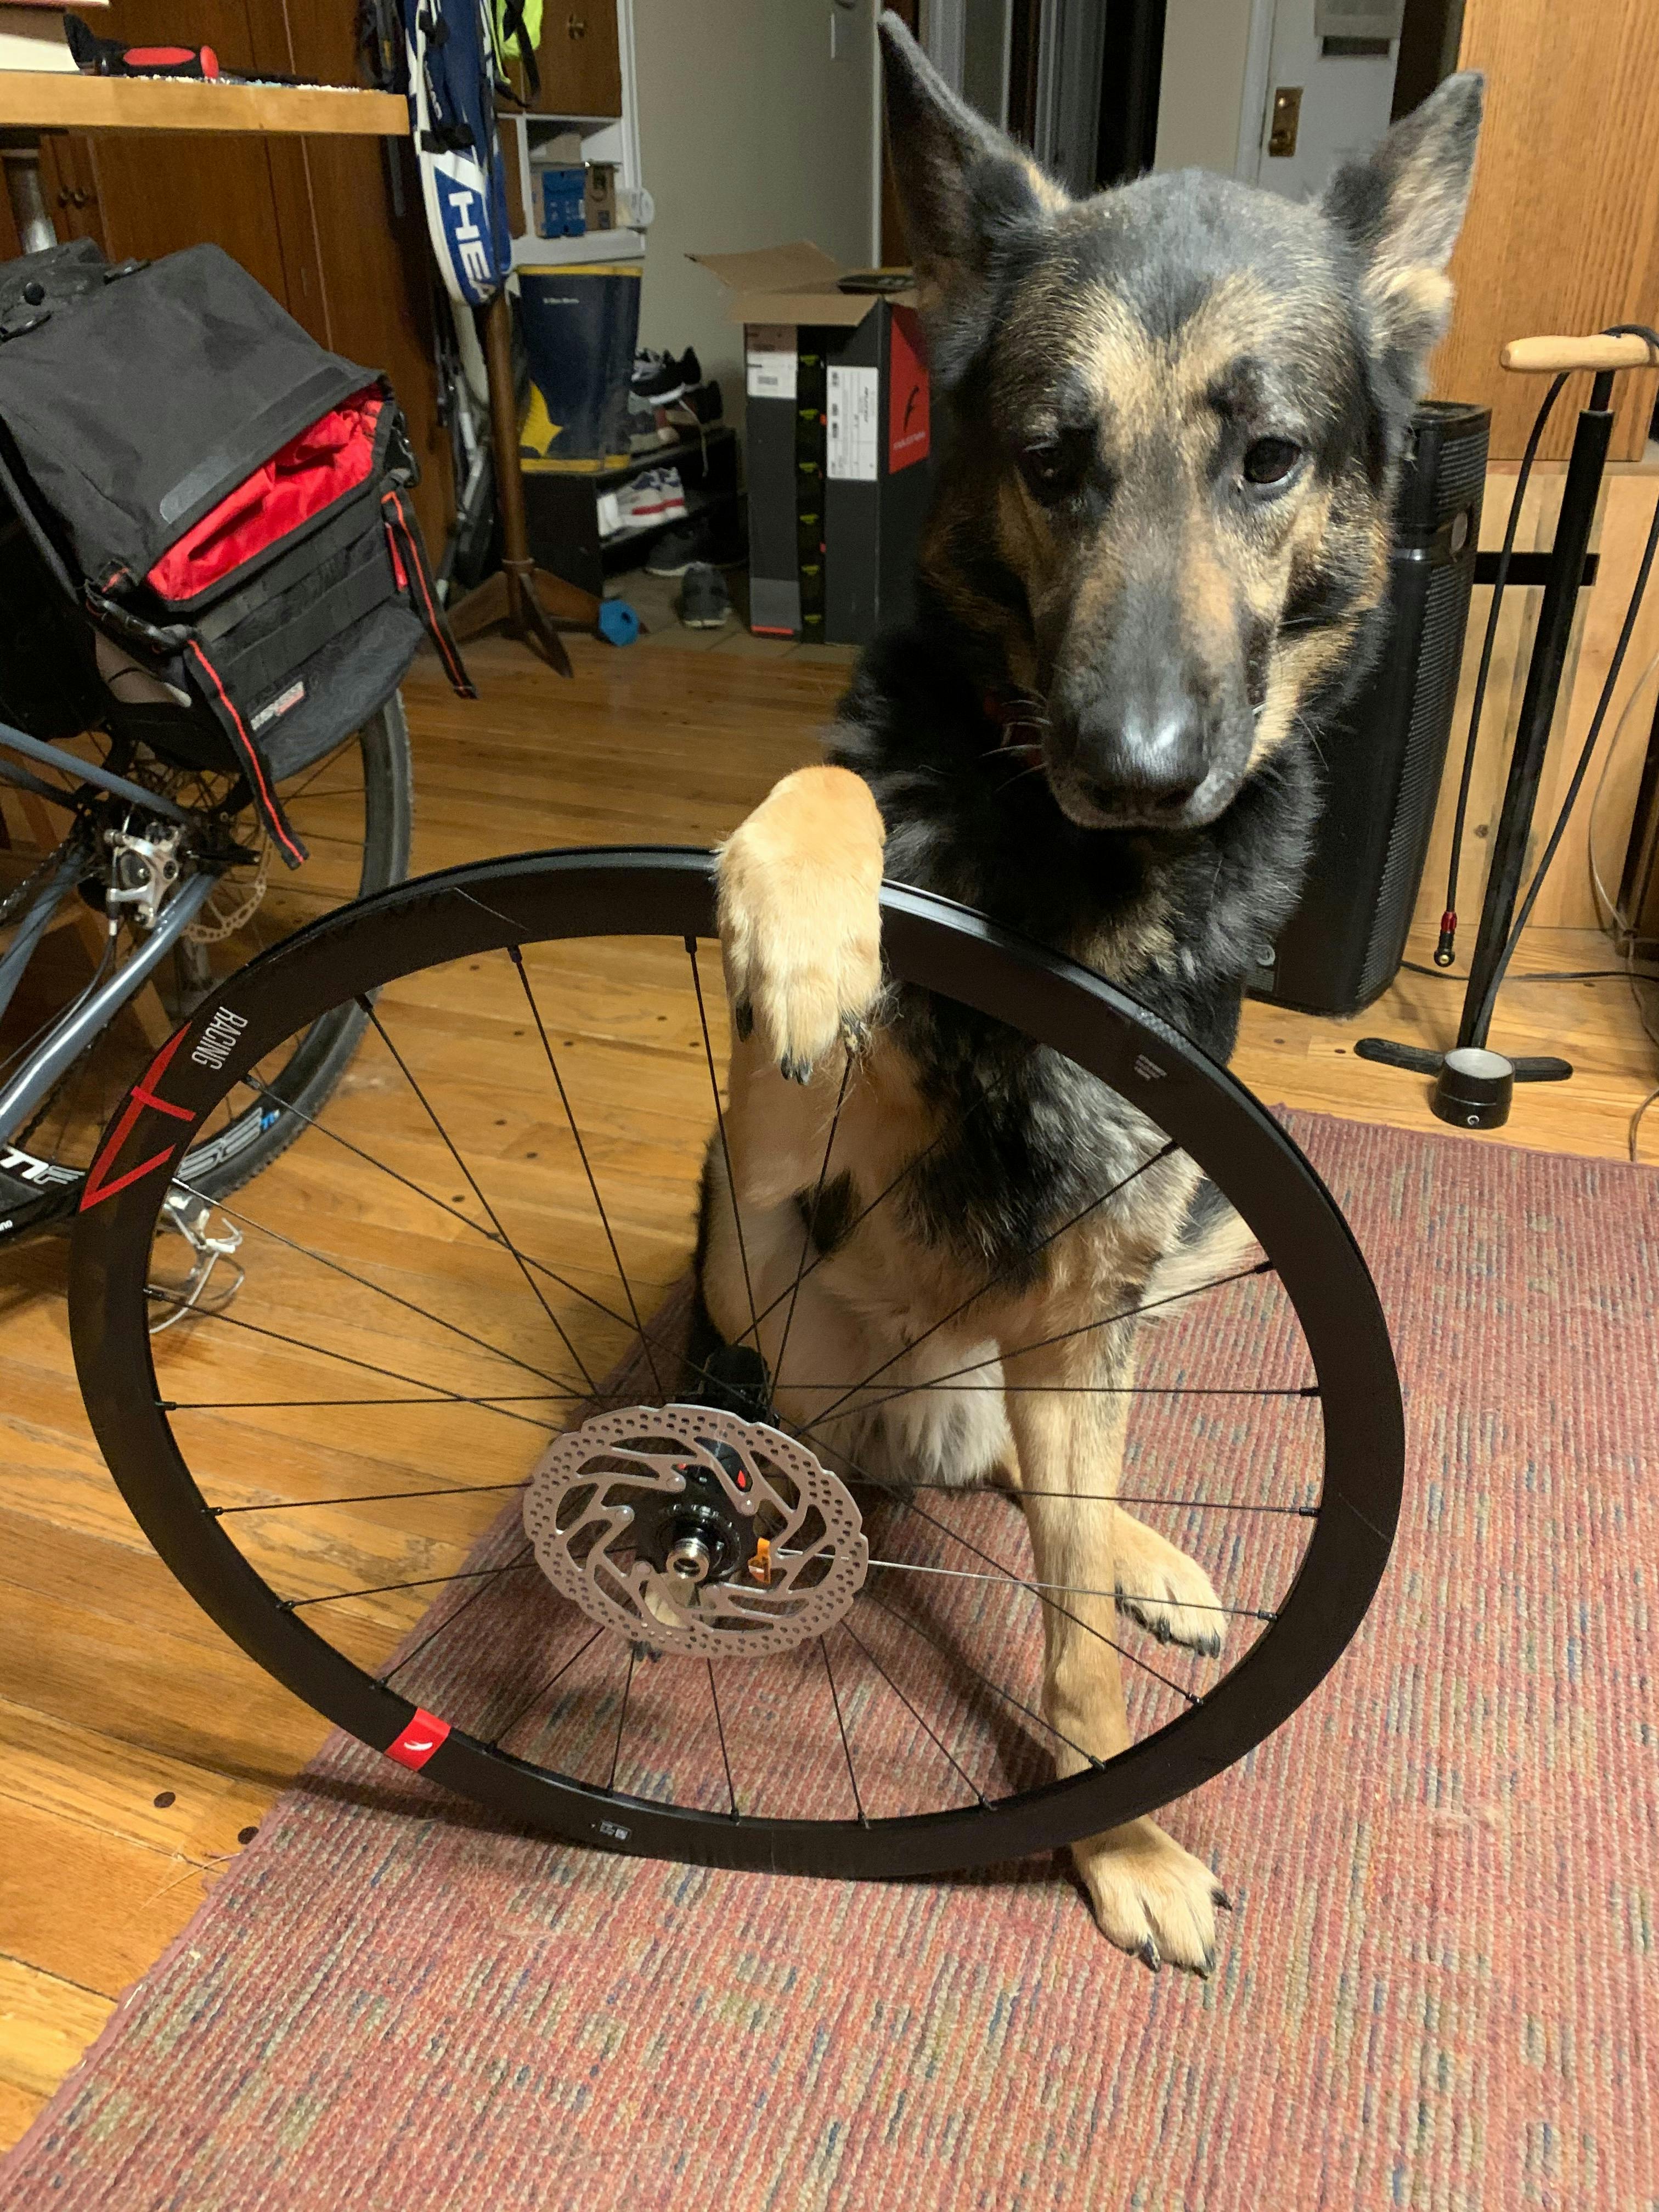 New bike mechanic